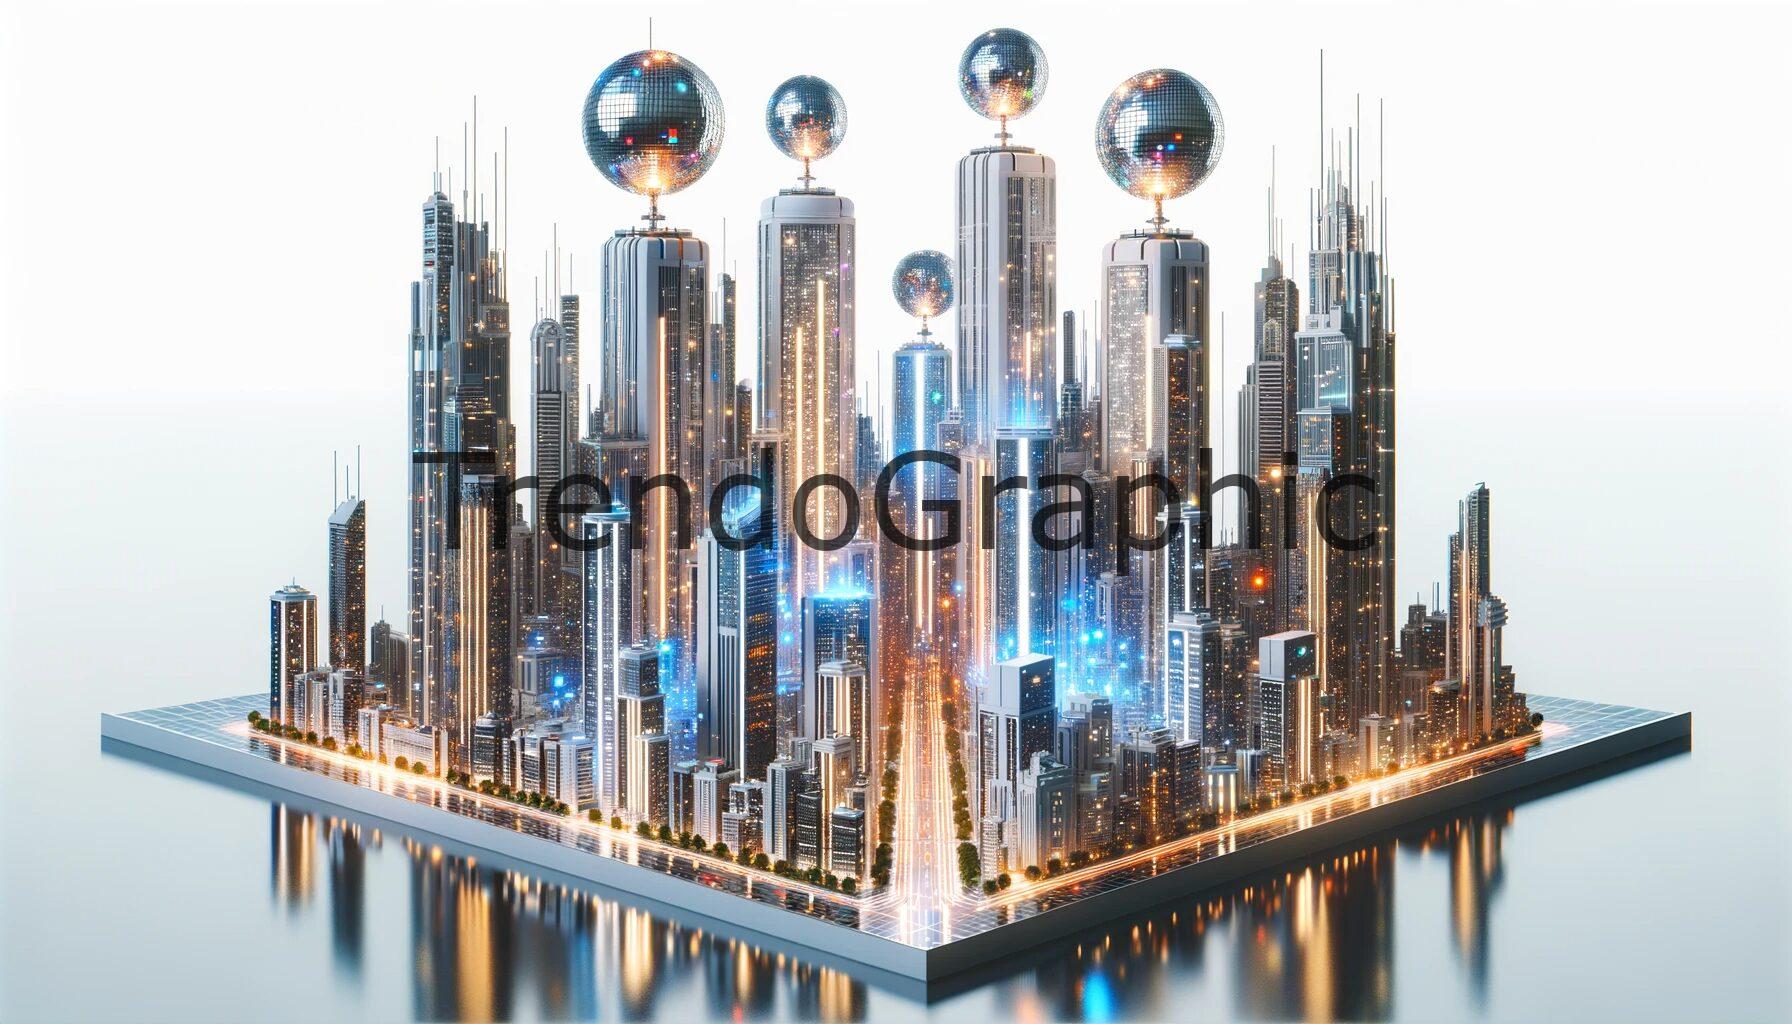 Gleaming Disco Ball Metropolis: A Vision of Future Cityscapes